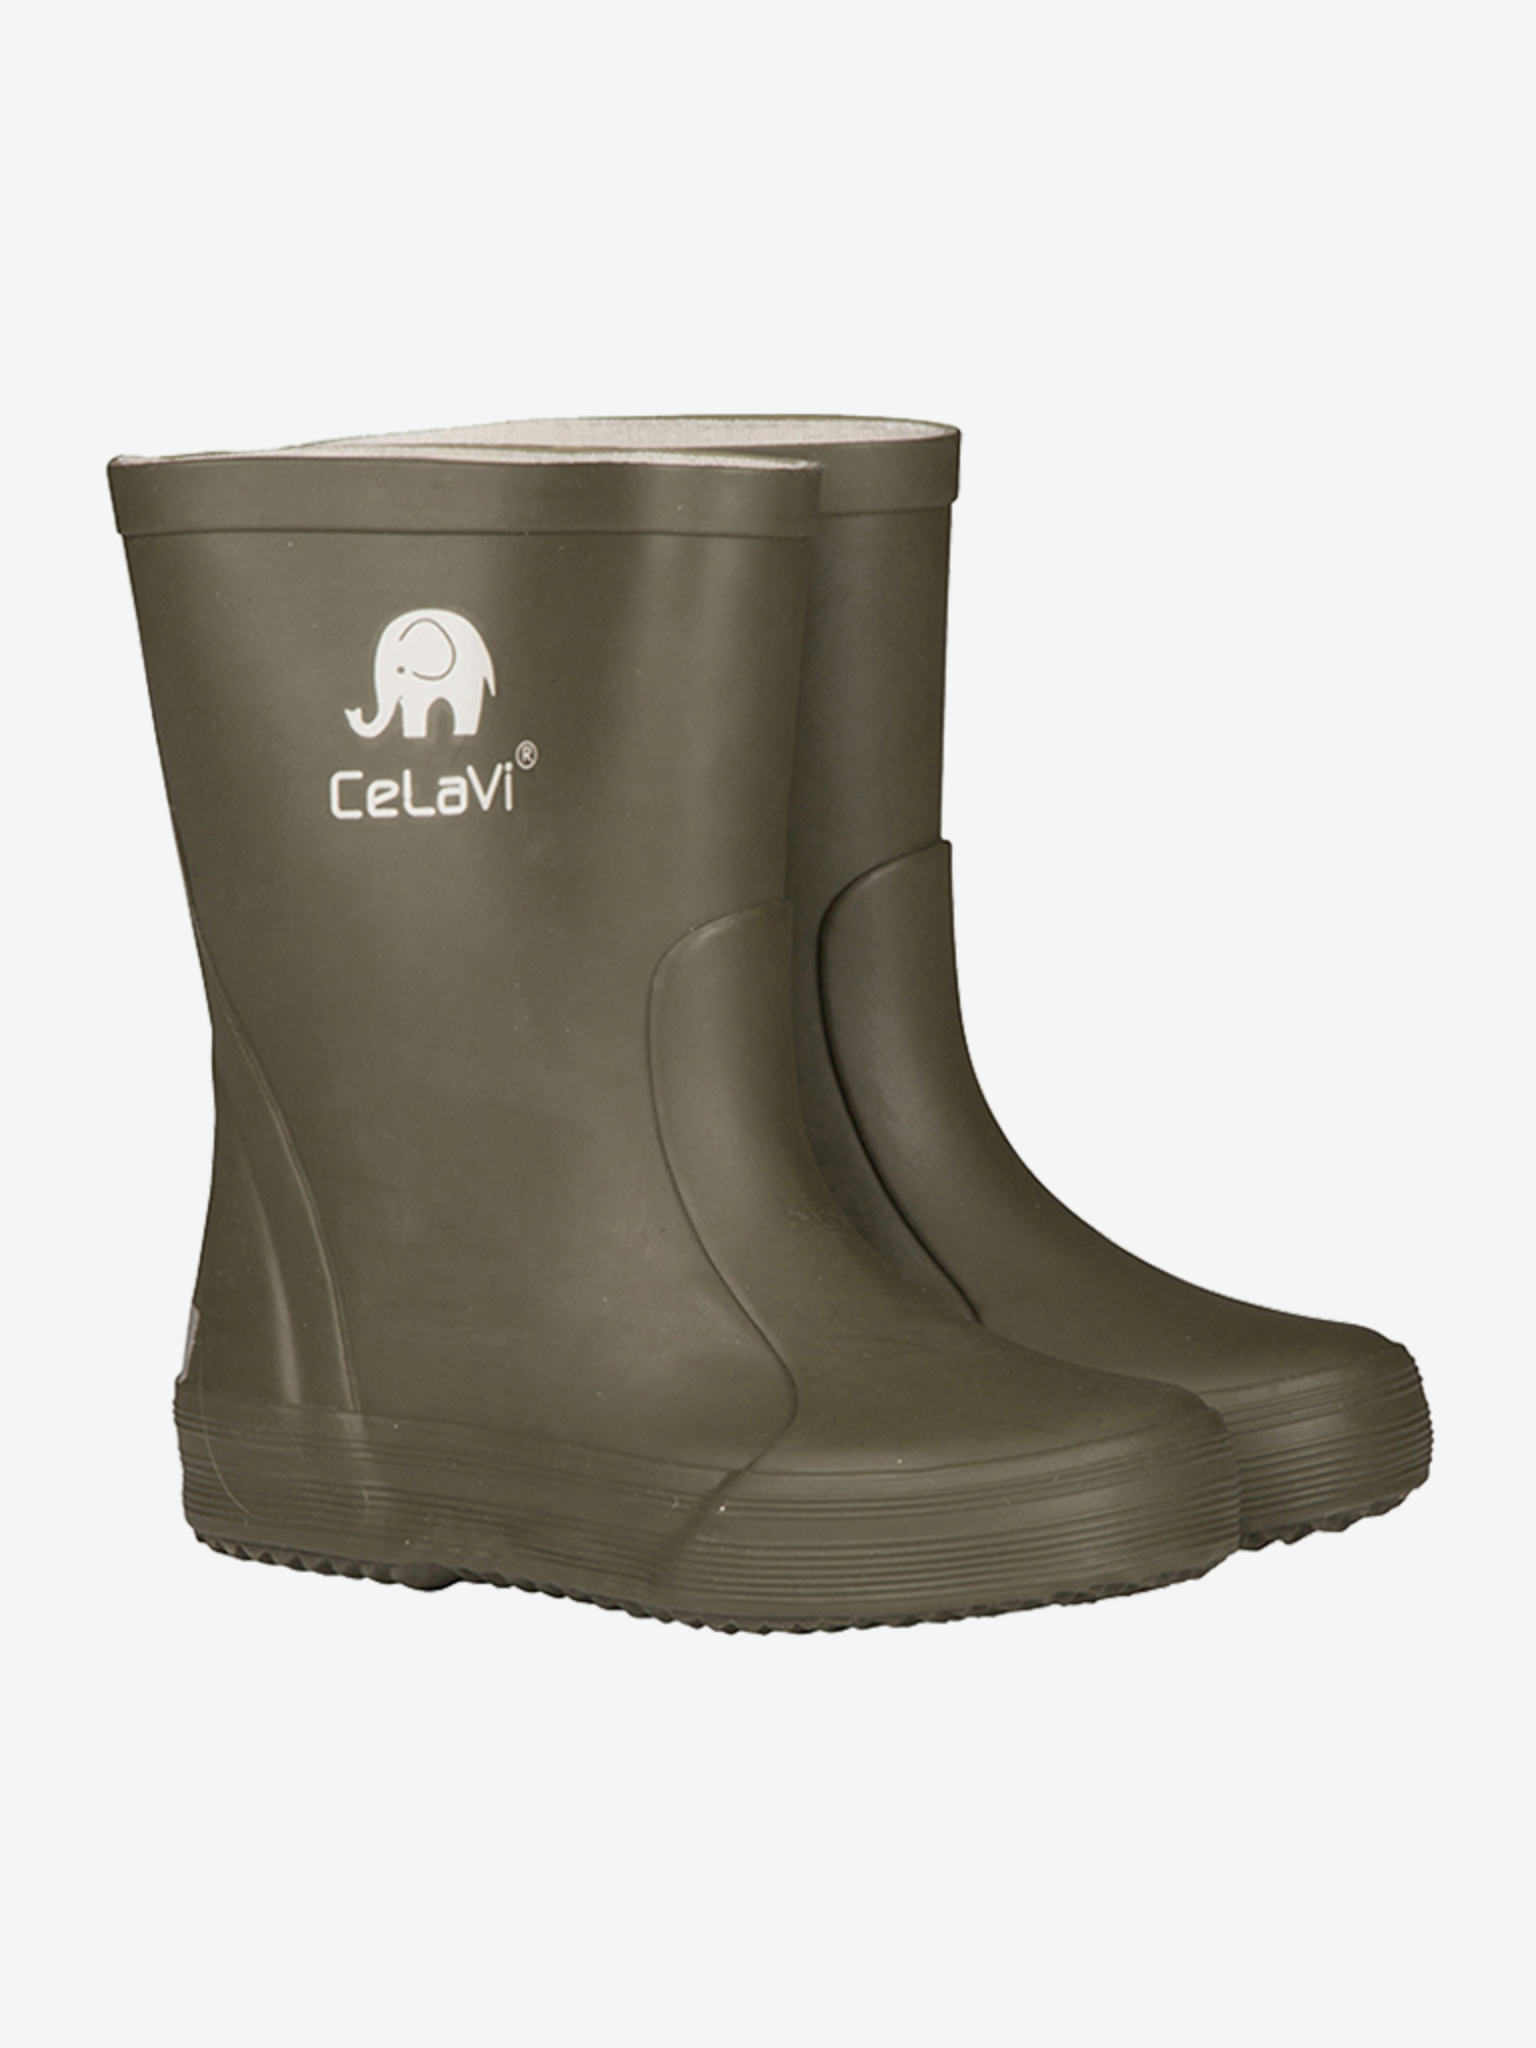 CeLaVi - Basic Wellies -Solid/ Gummistövlar- Army